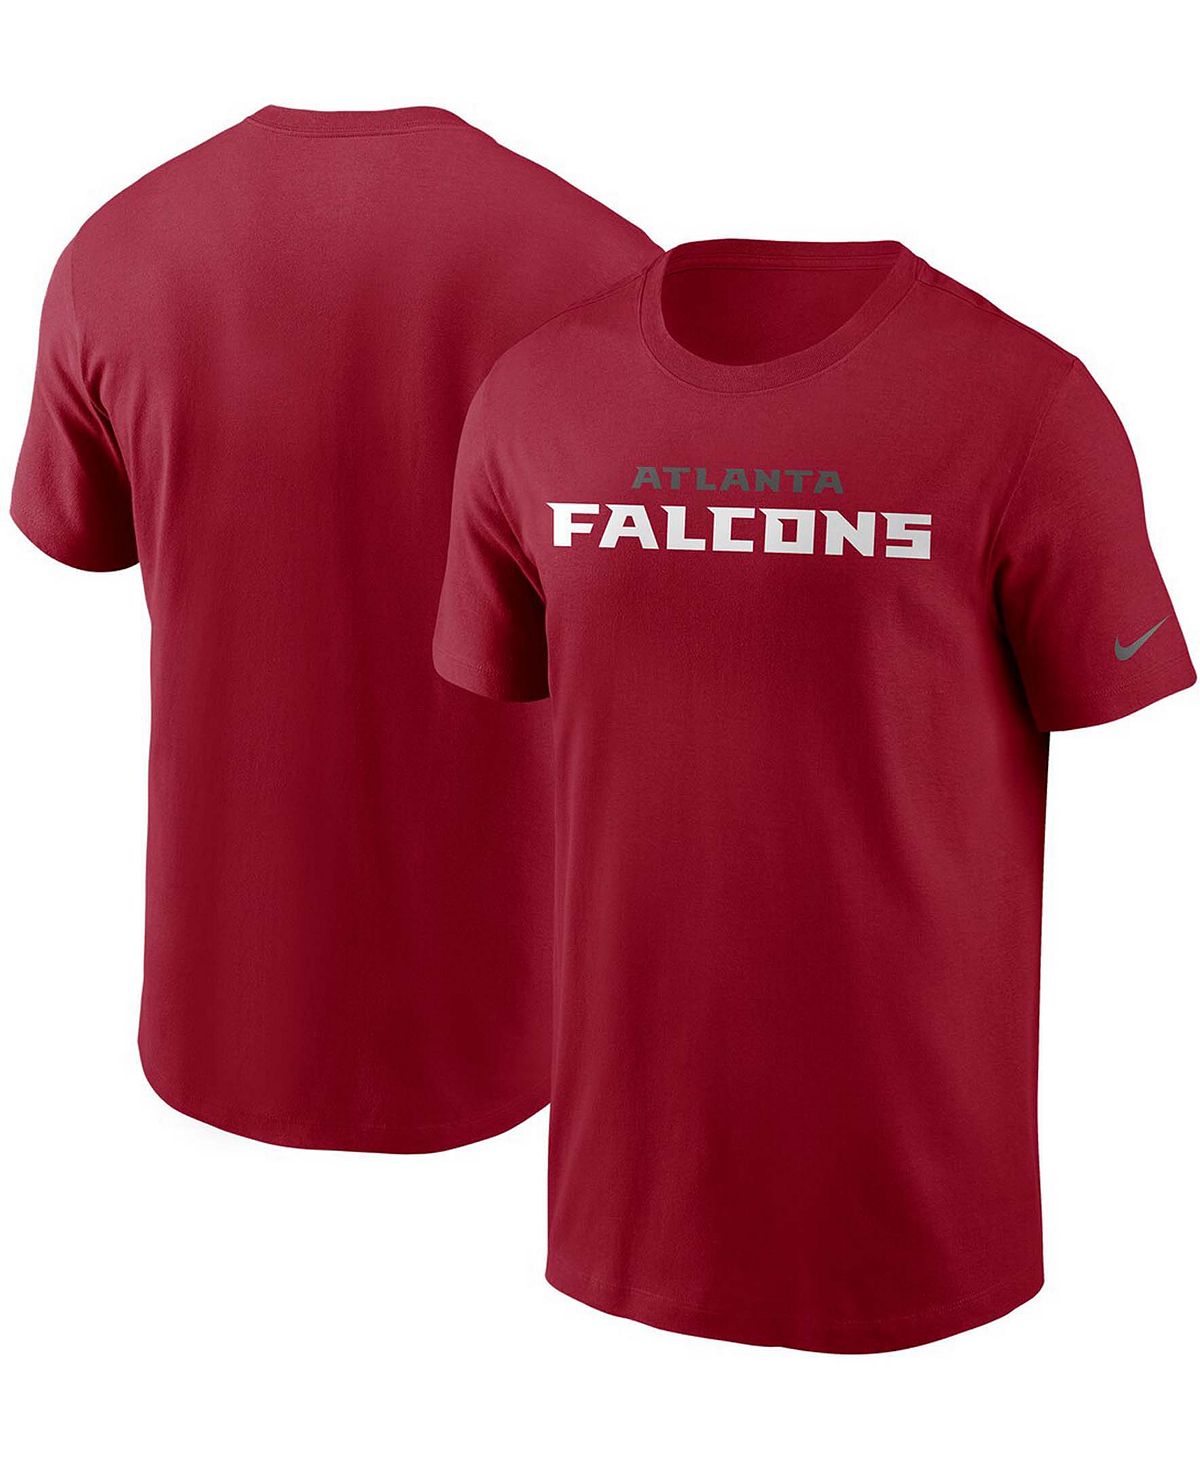 Мужская красная футболка с надписью Atlanta Falcons Team Nike